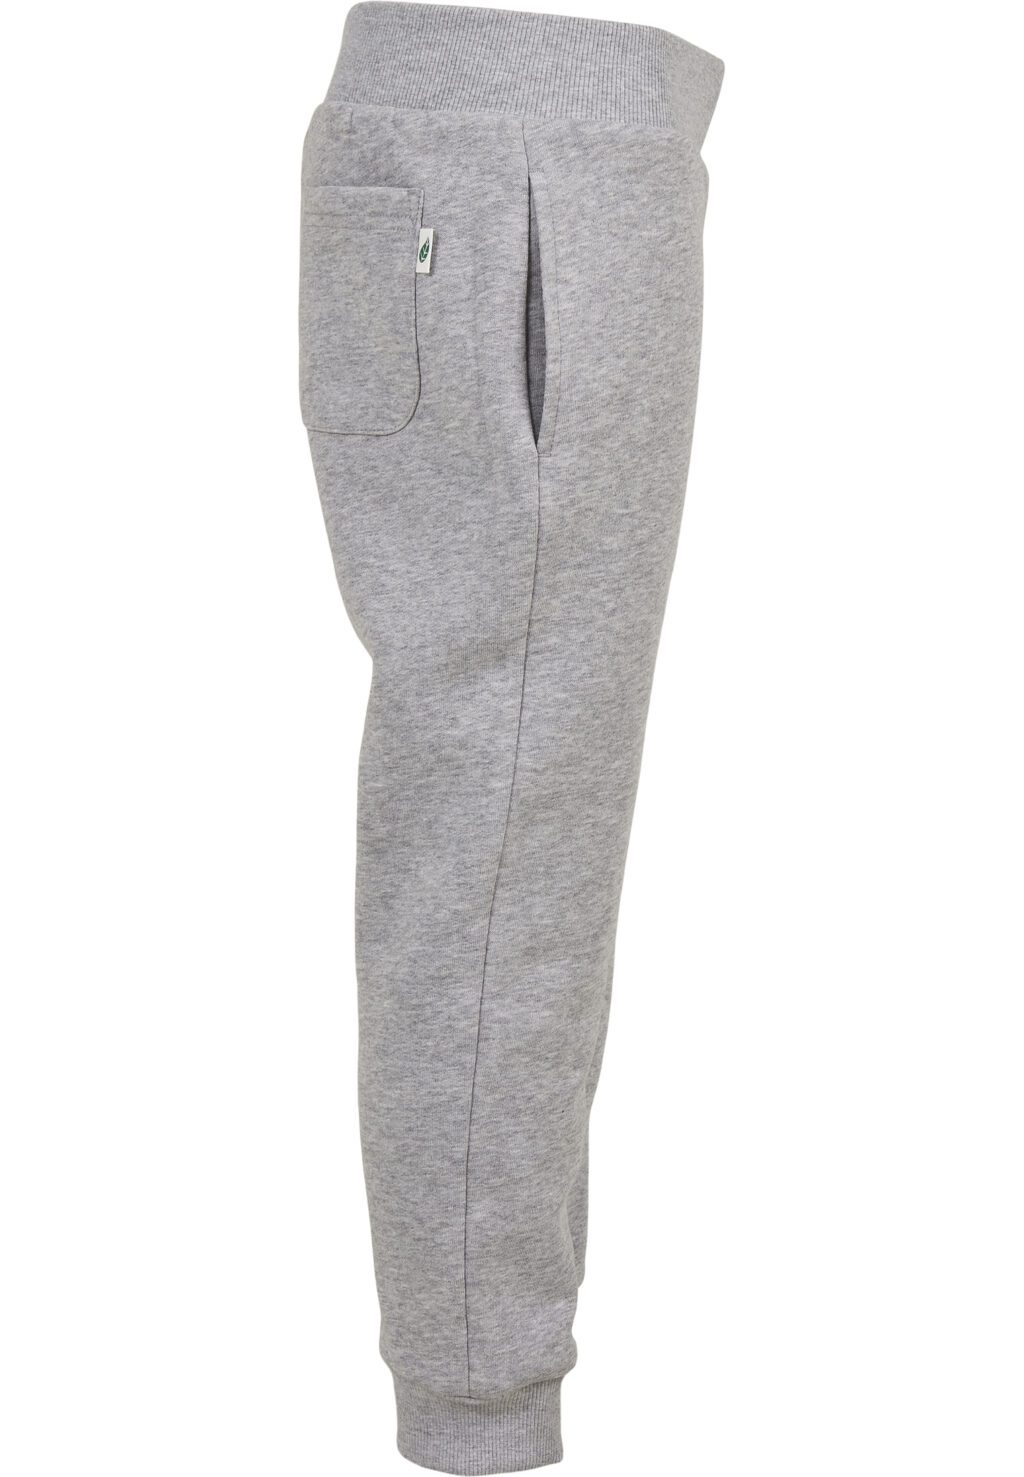 Boys Organic Basic Sweatpants grey UCK3825